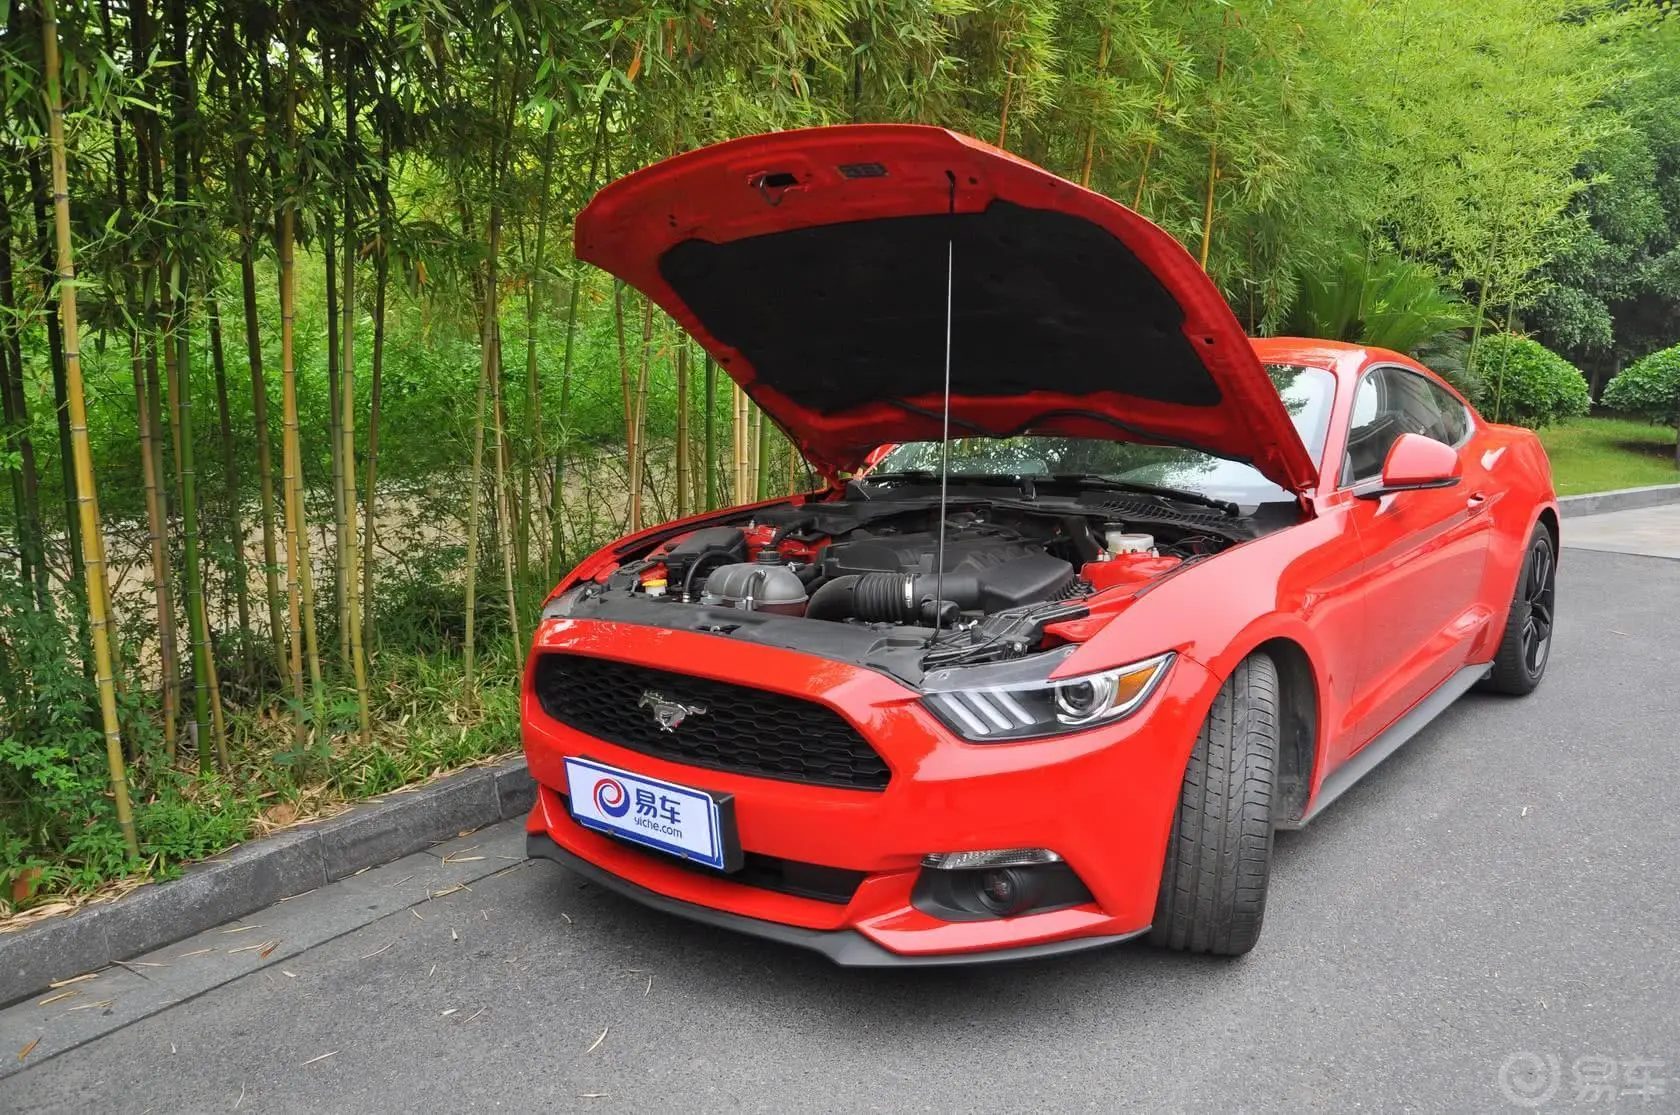 Mustang2.3L 手自一体 50周年纪念版发动机盖开启